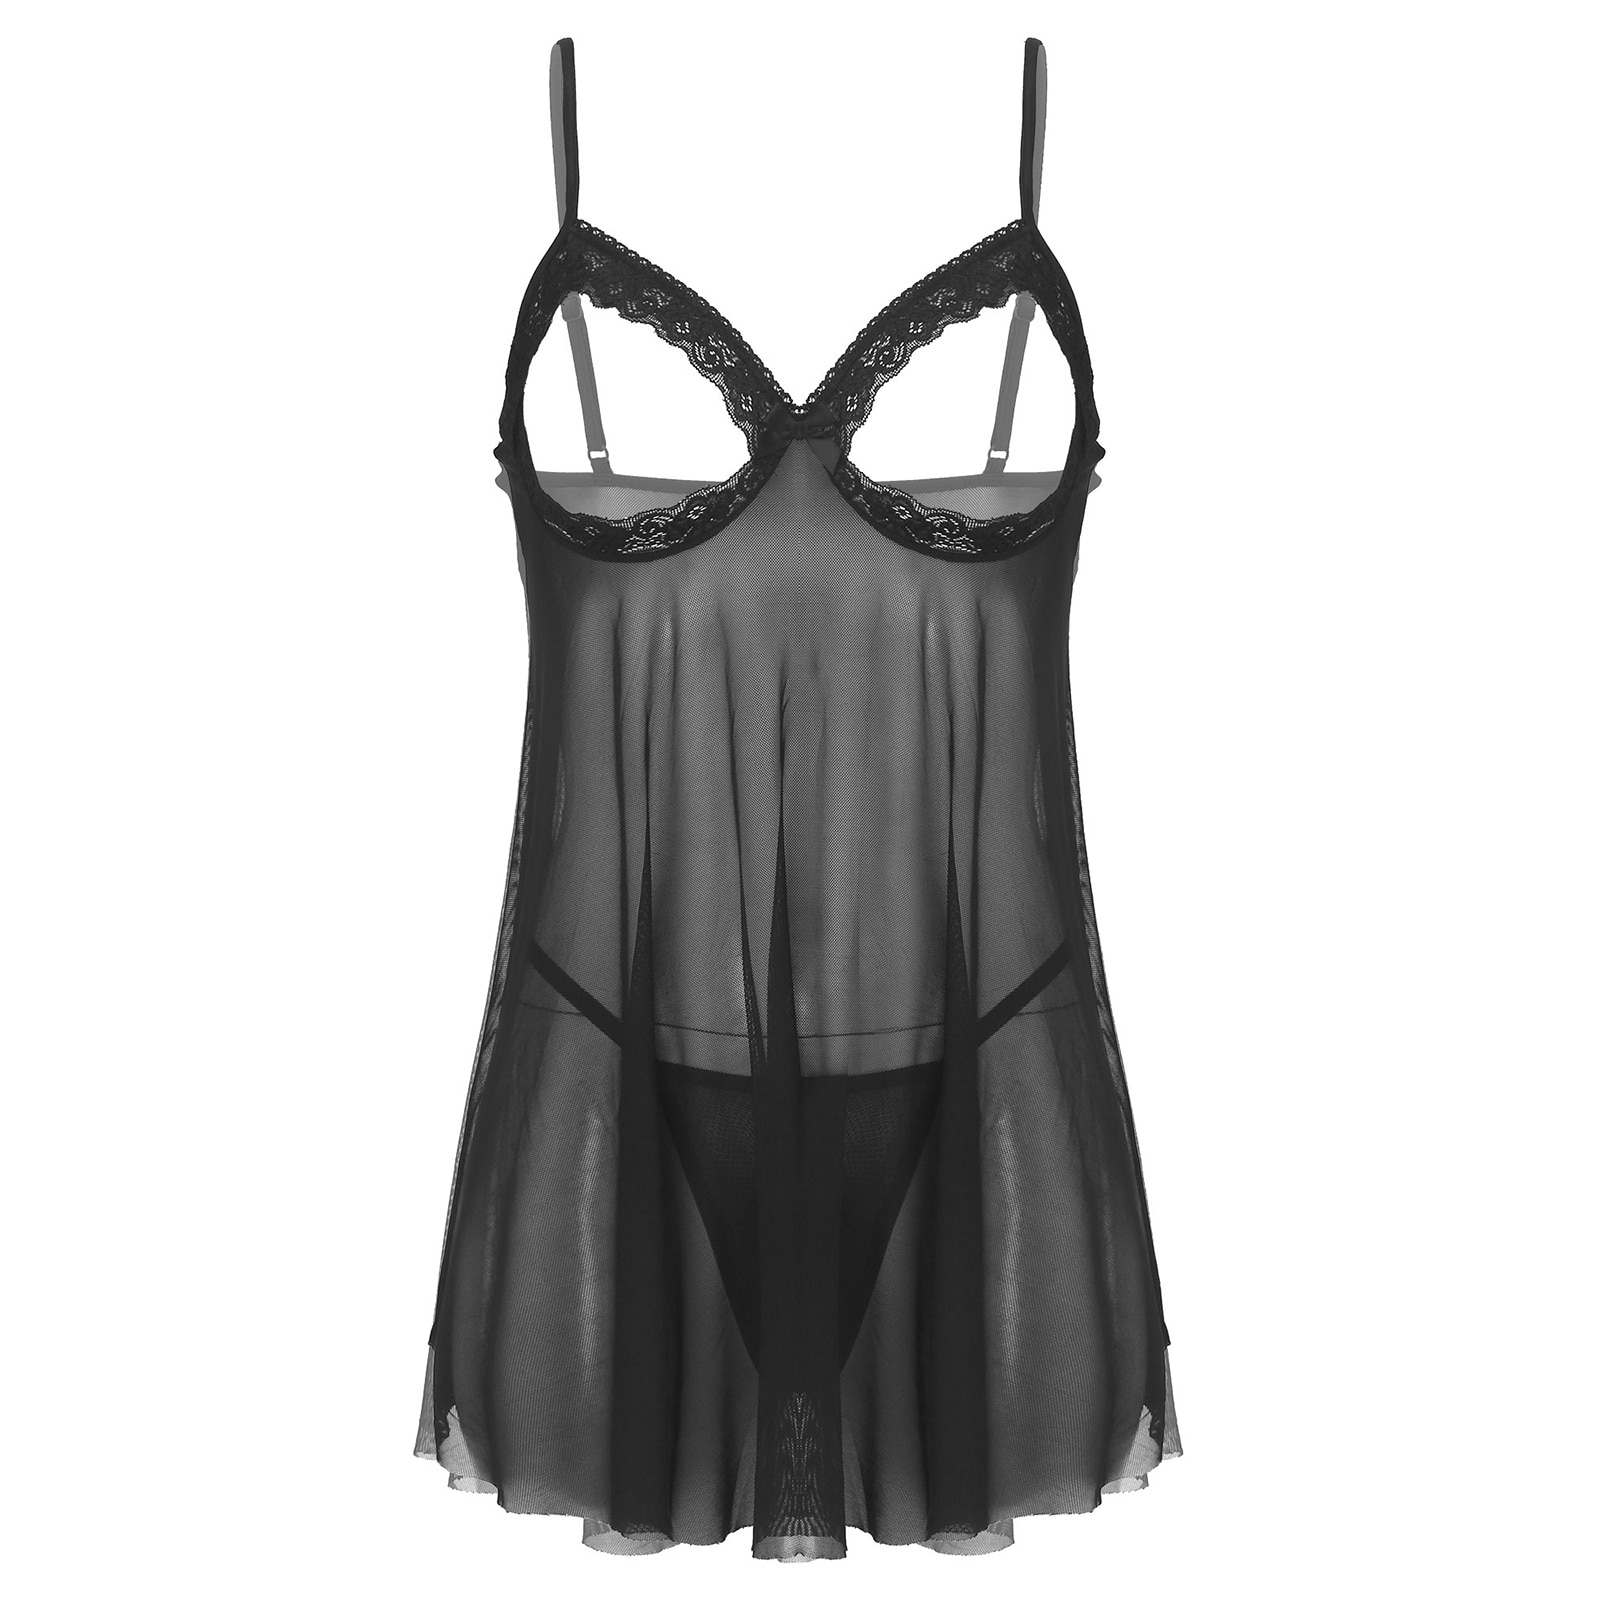 Women's Erotic Sleepwear / Sexy Nightwear with Open Cup / Mesh Lingerie with G-string - EVE's SECRETS